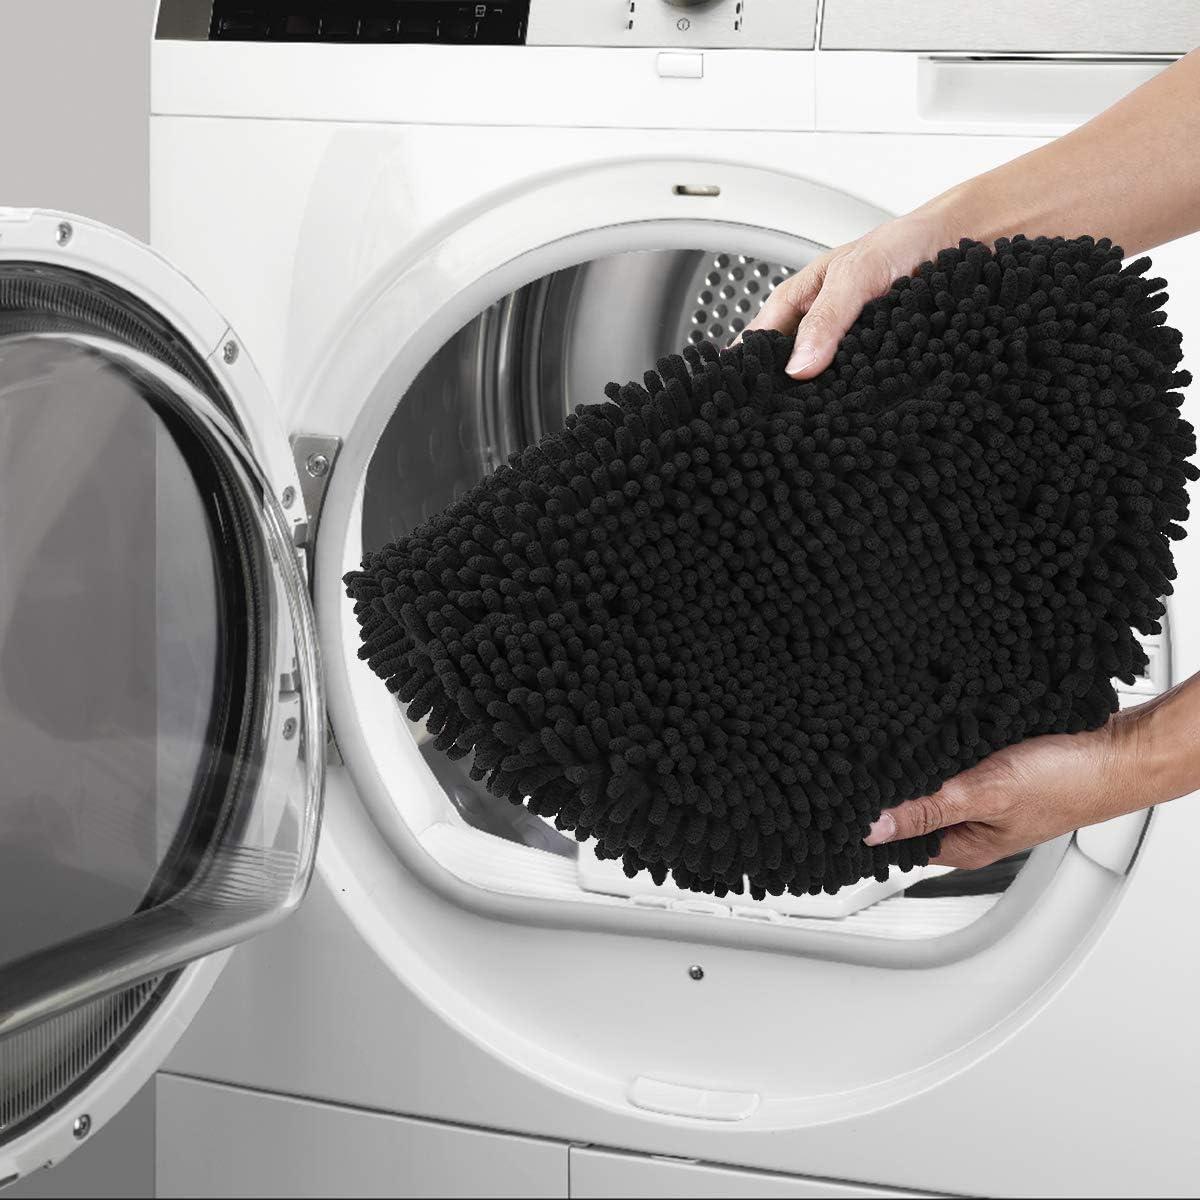 Washer And Dryer Covers Protector Mat,anti-slip Washing Machine